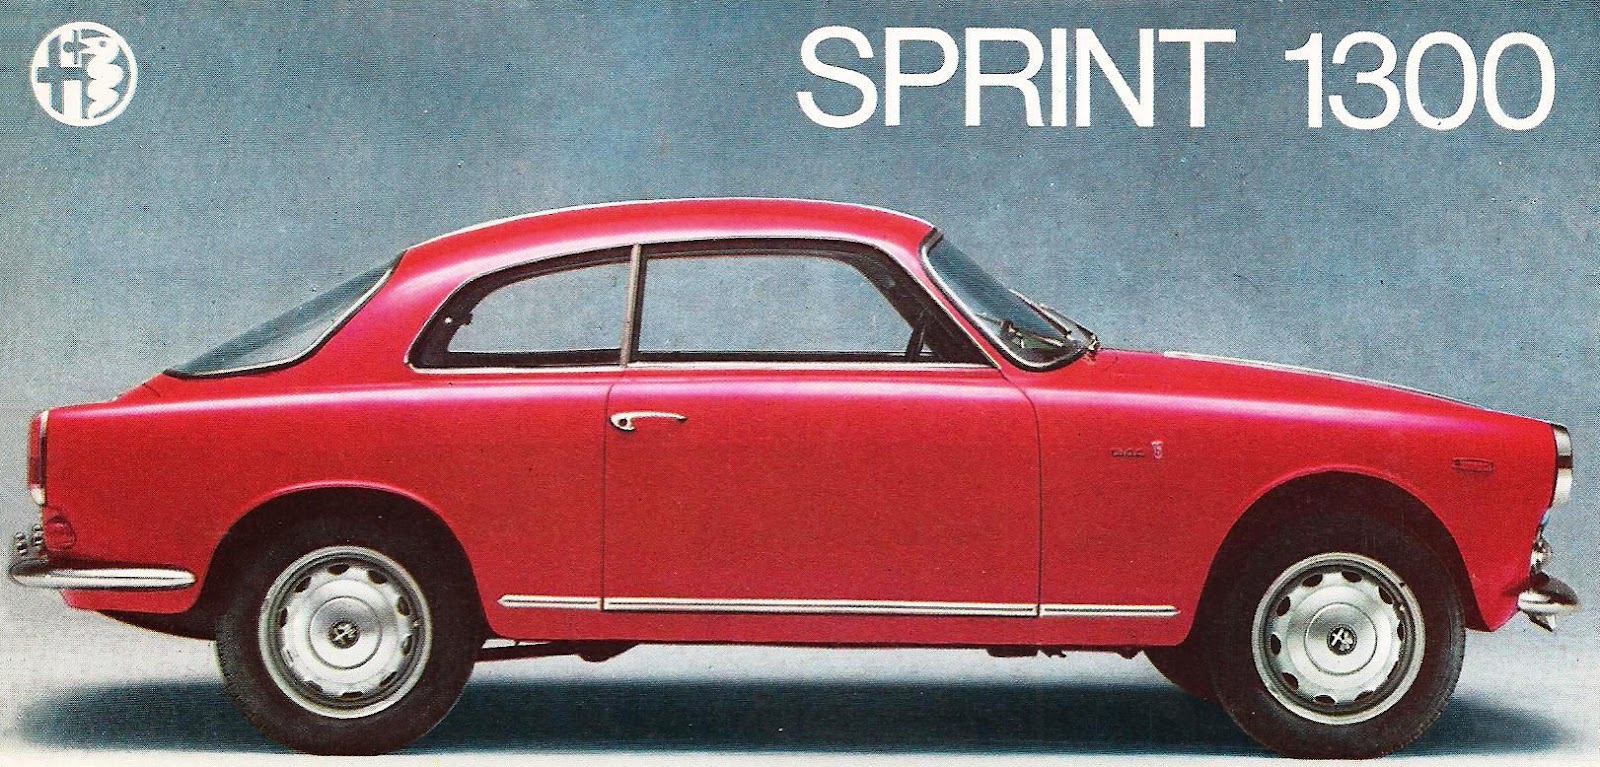 1964-Alfa-Romeo-Sprint-1300-011.jpg